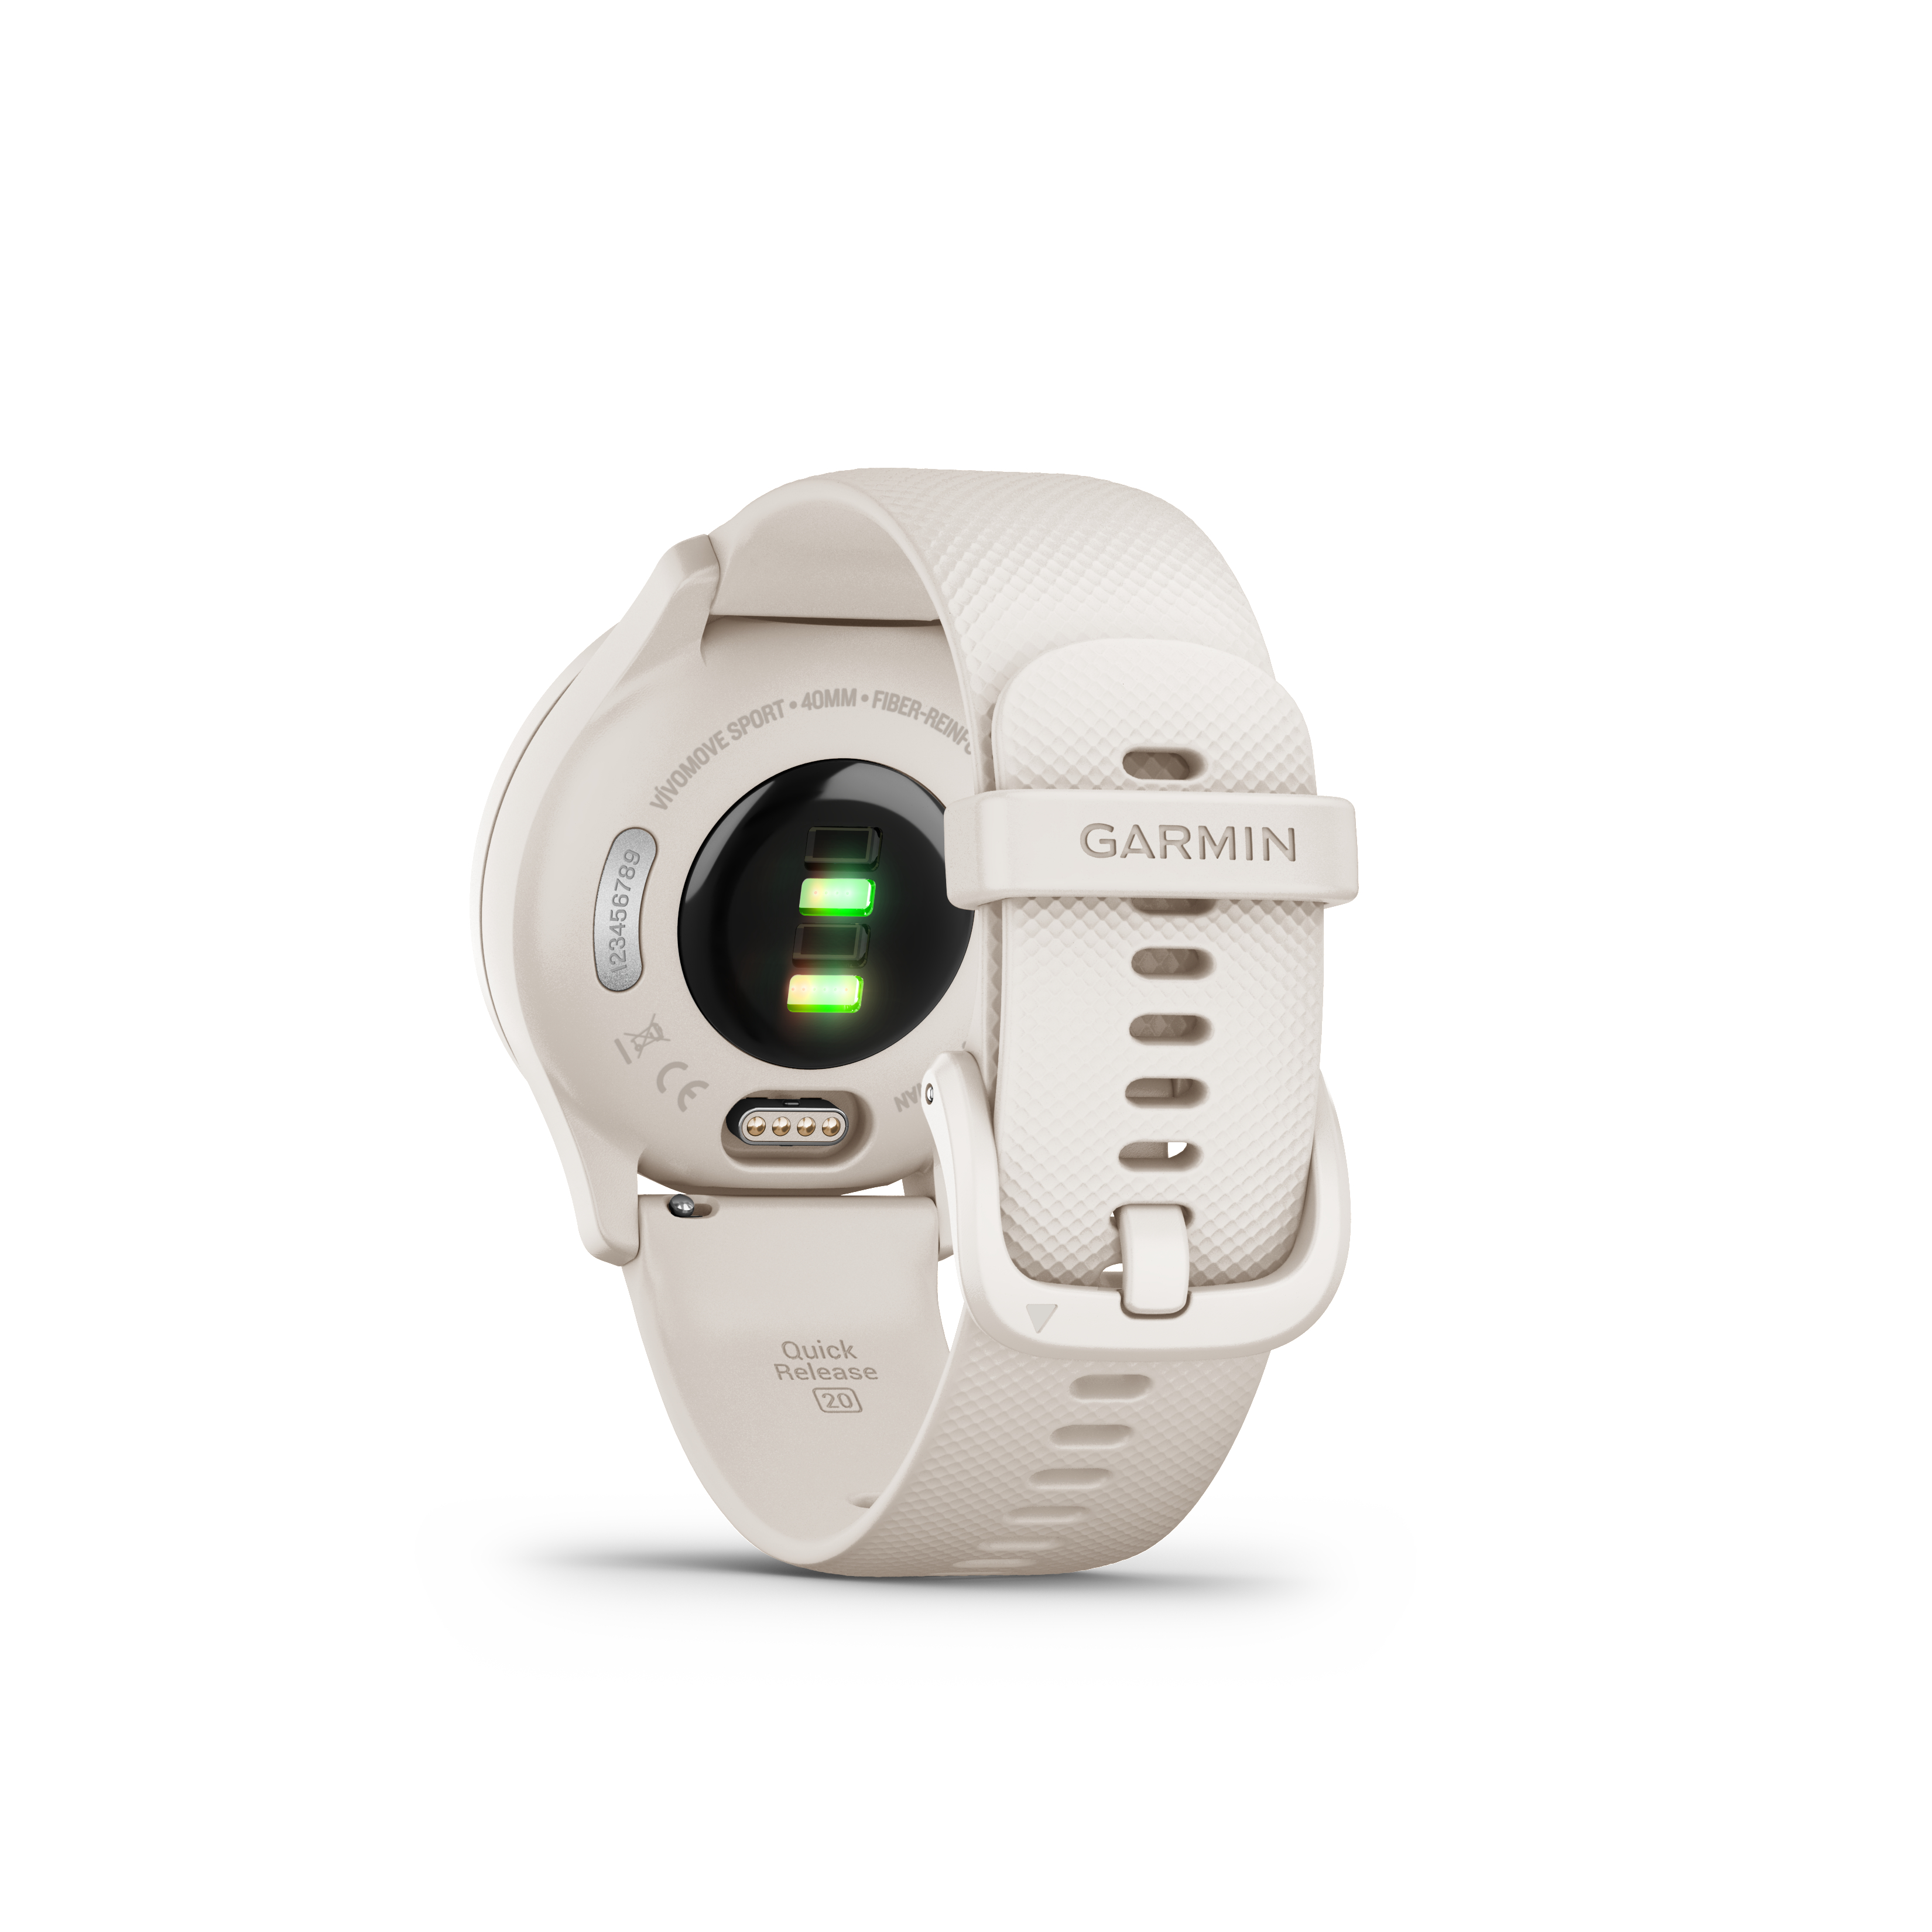 Faserverstärktes GARMIN Smartwatch Silikon, Polymer 125-190 Garmin mm, Vivomove Elfenbein/Perlgold